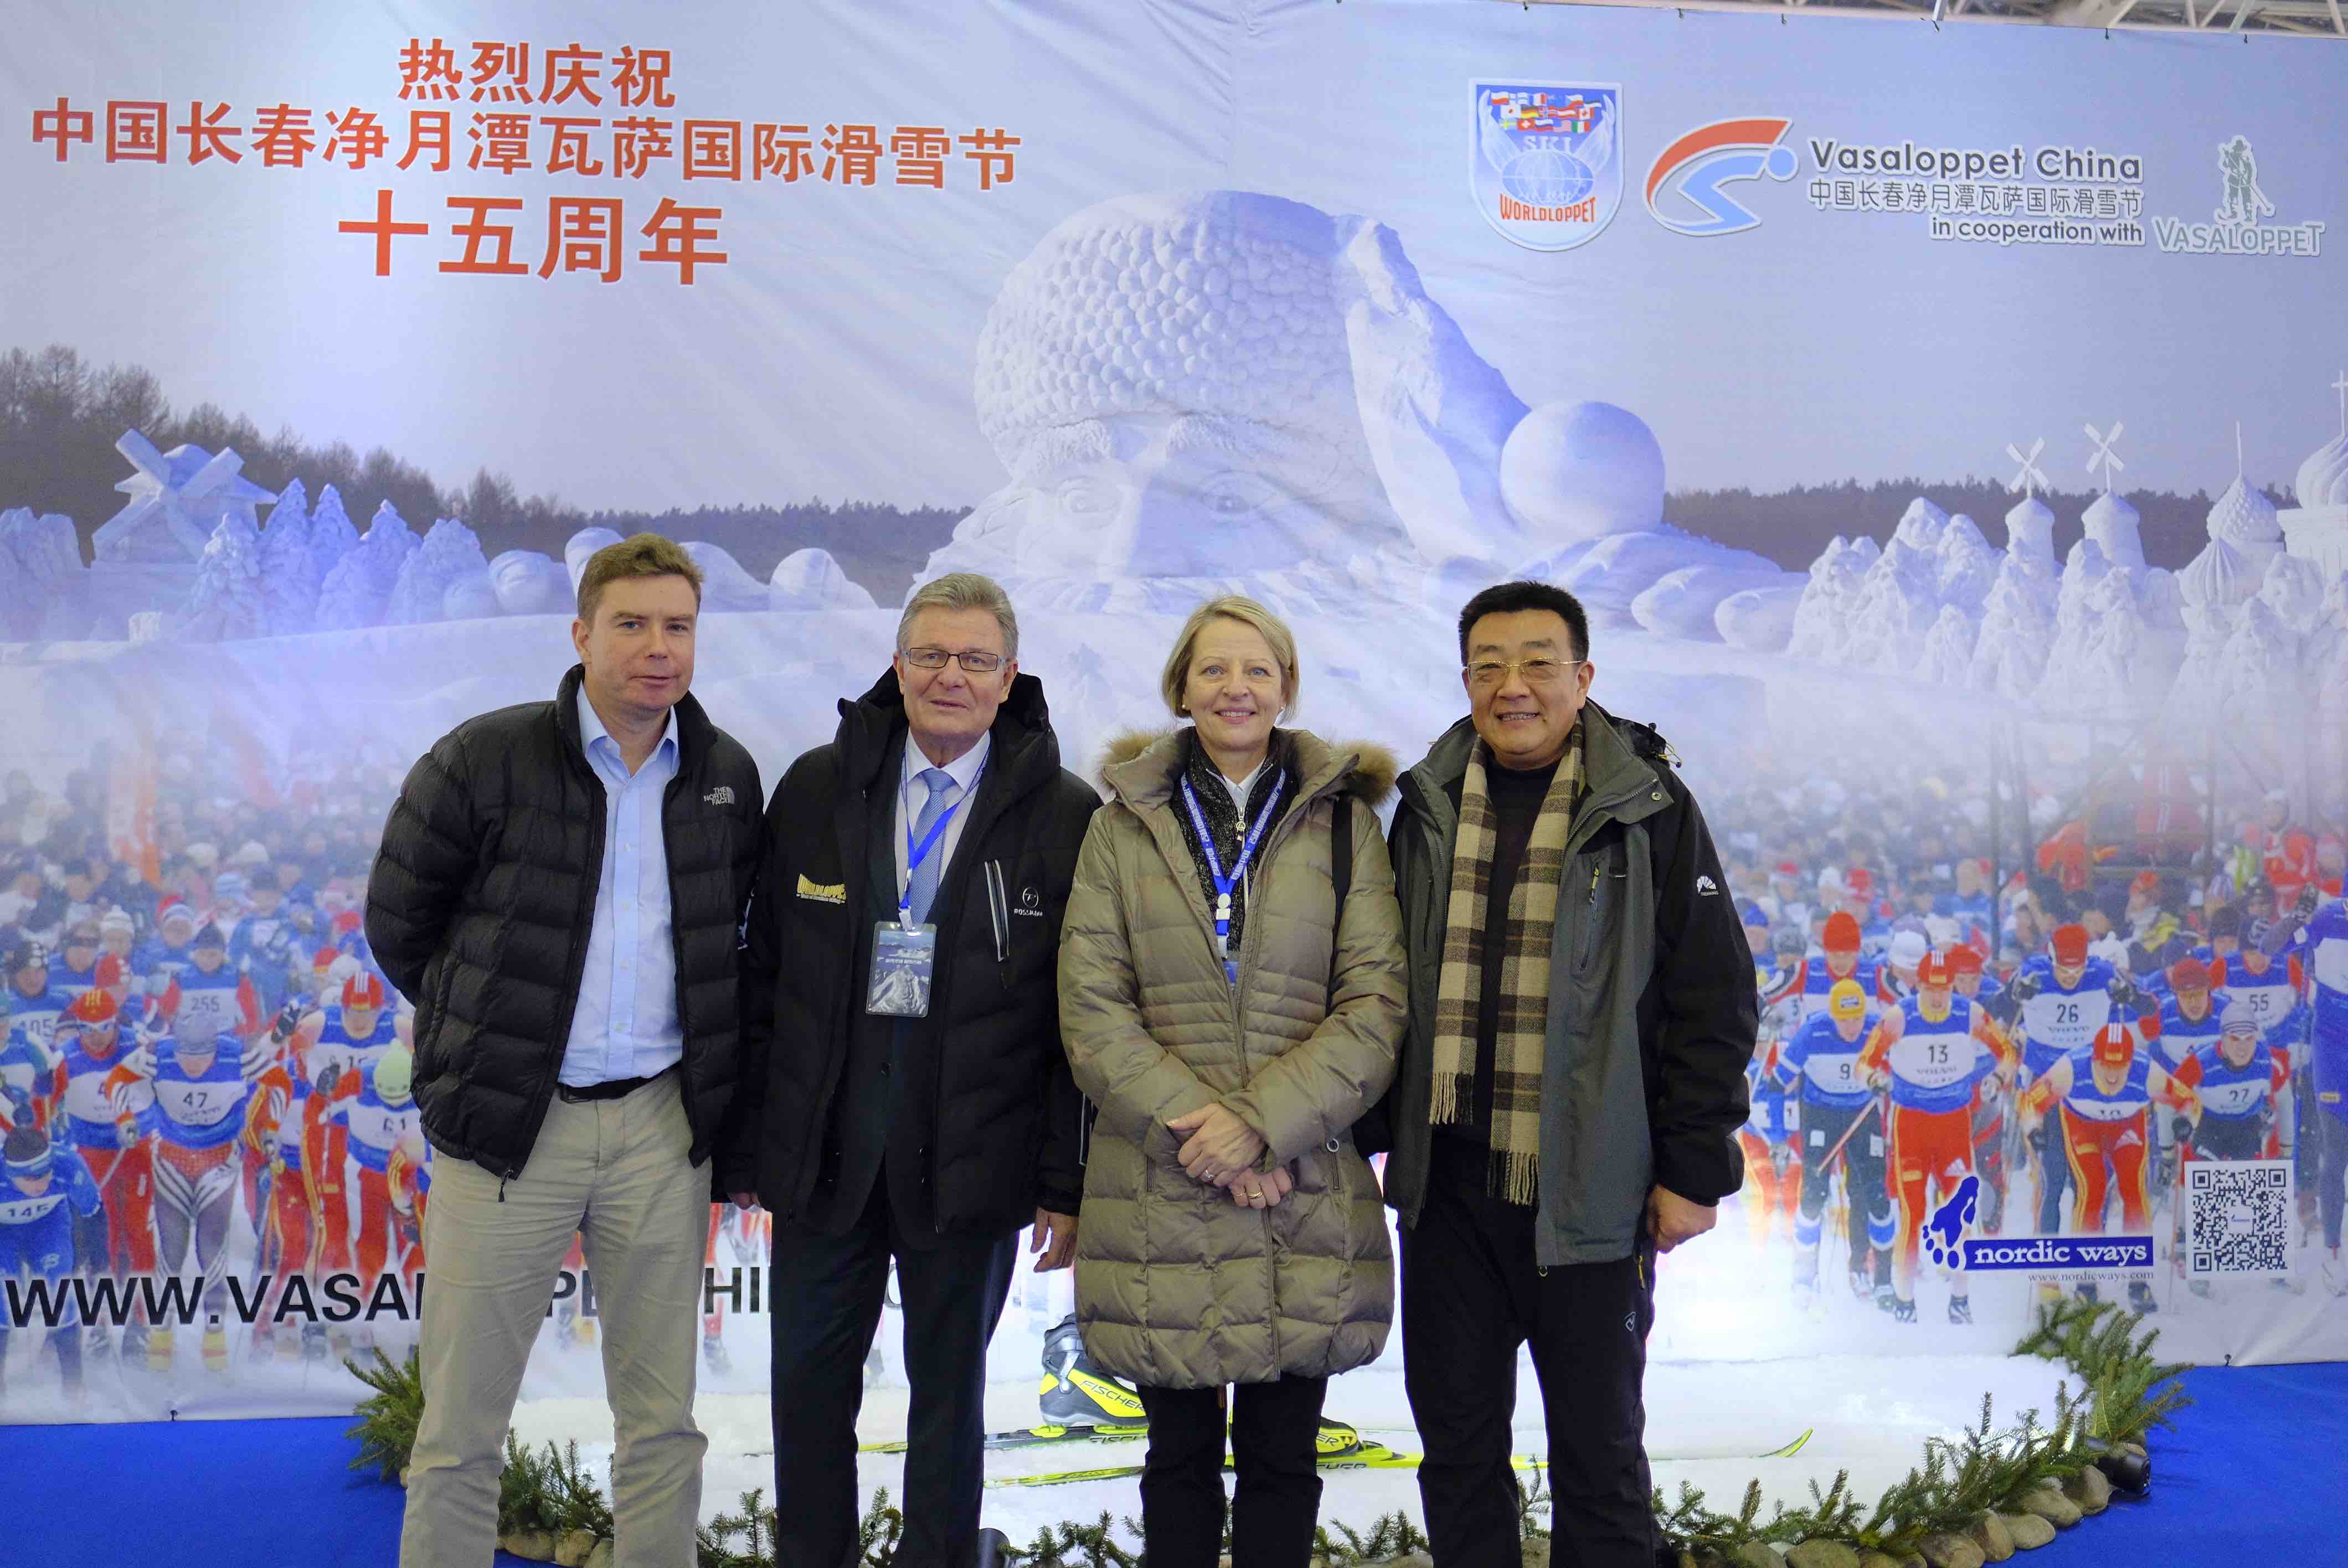 You are currently viewing 诺迪维瓦萨公司携瓦萨滑雪节出席首届中国吉林国际冰雪旅游产业博览会